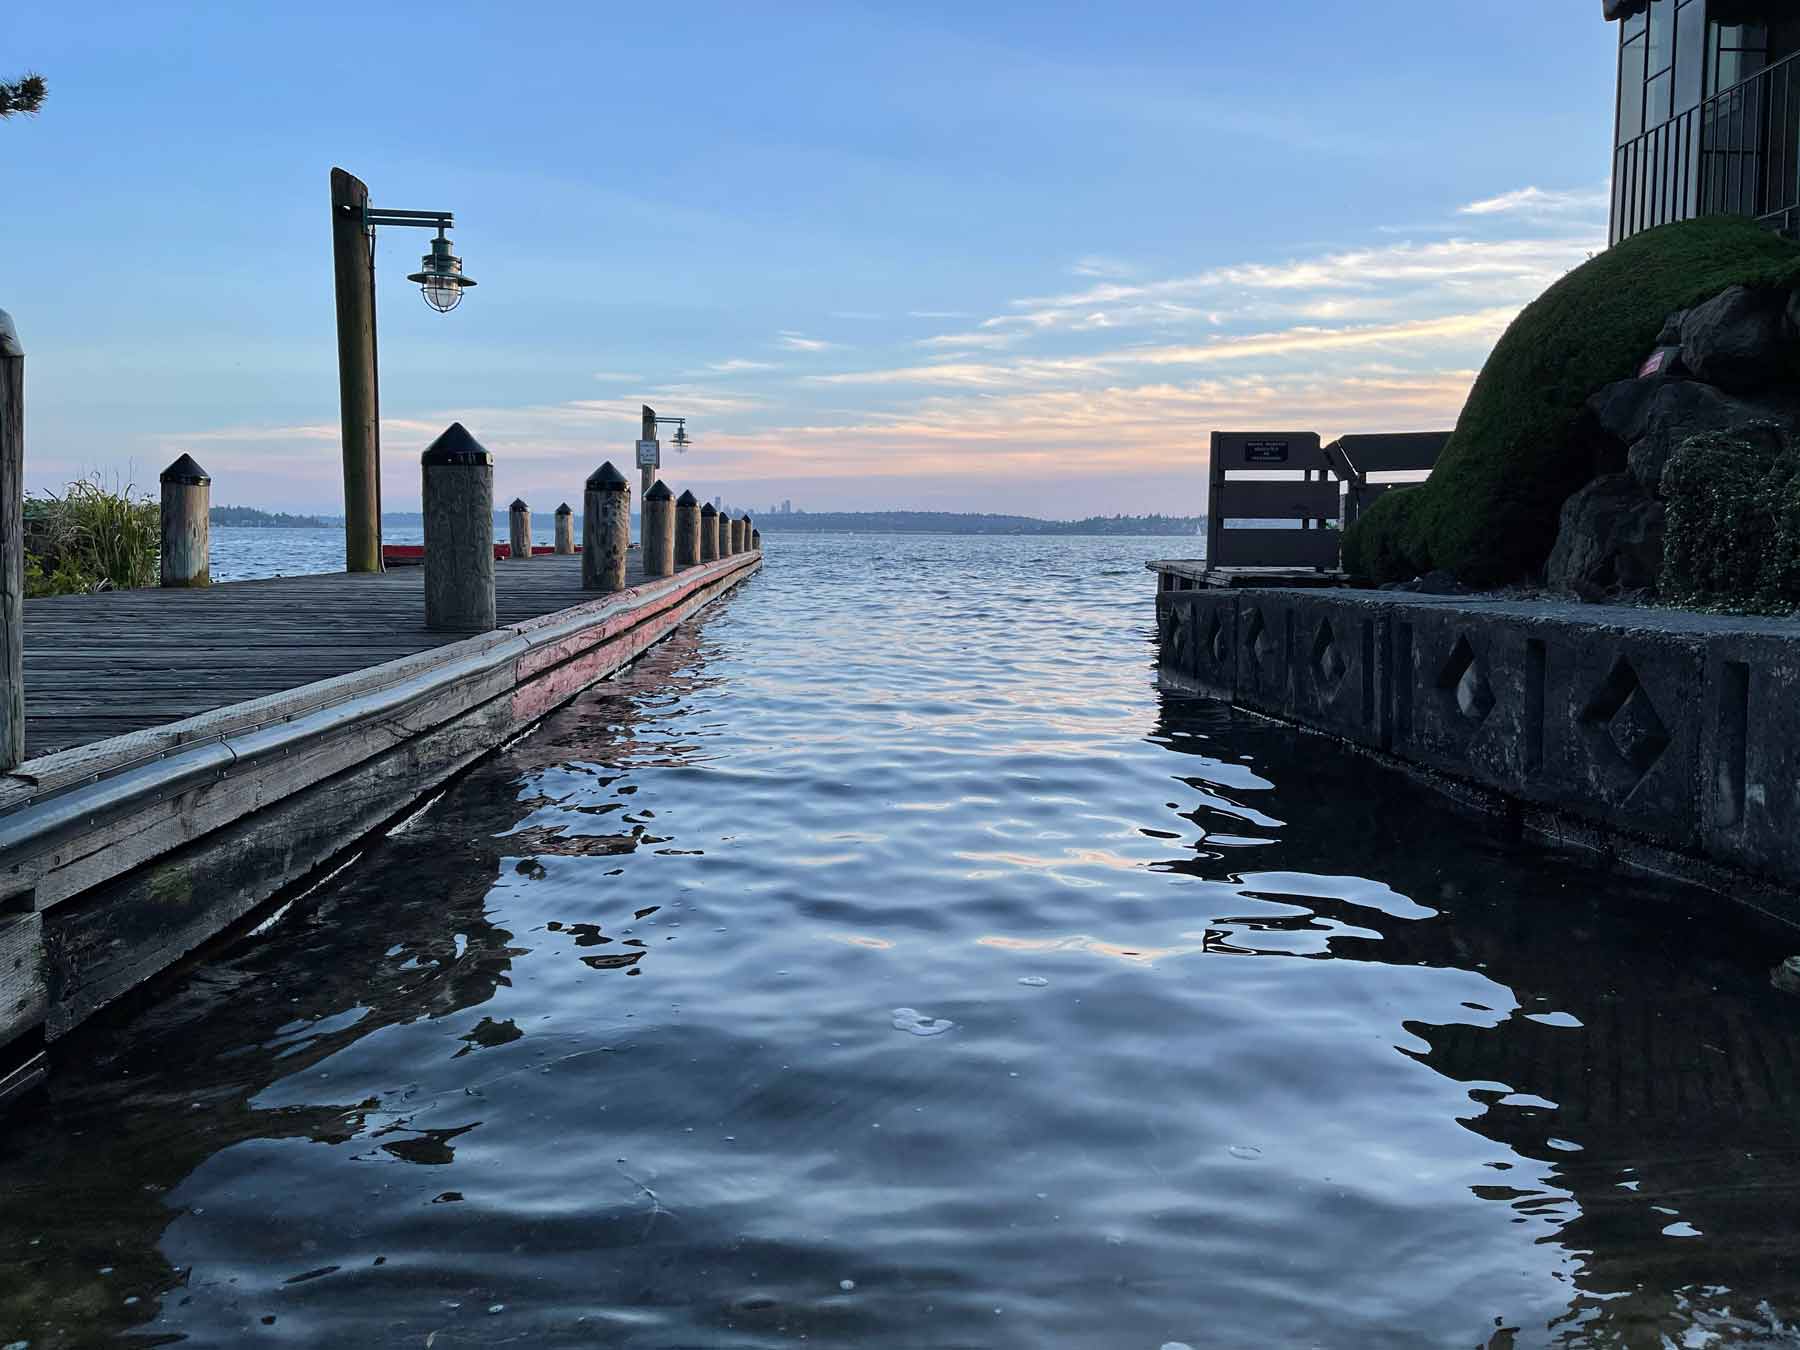 Kirkland dock on Lake Washington